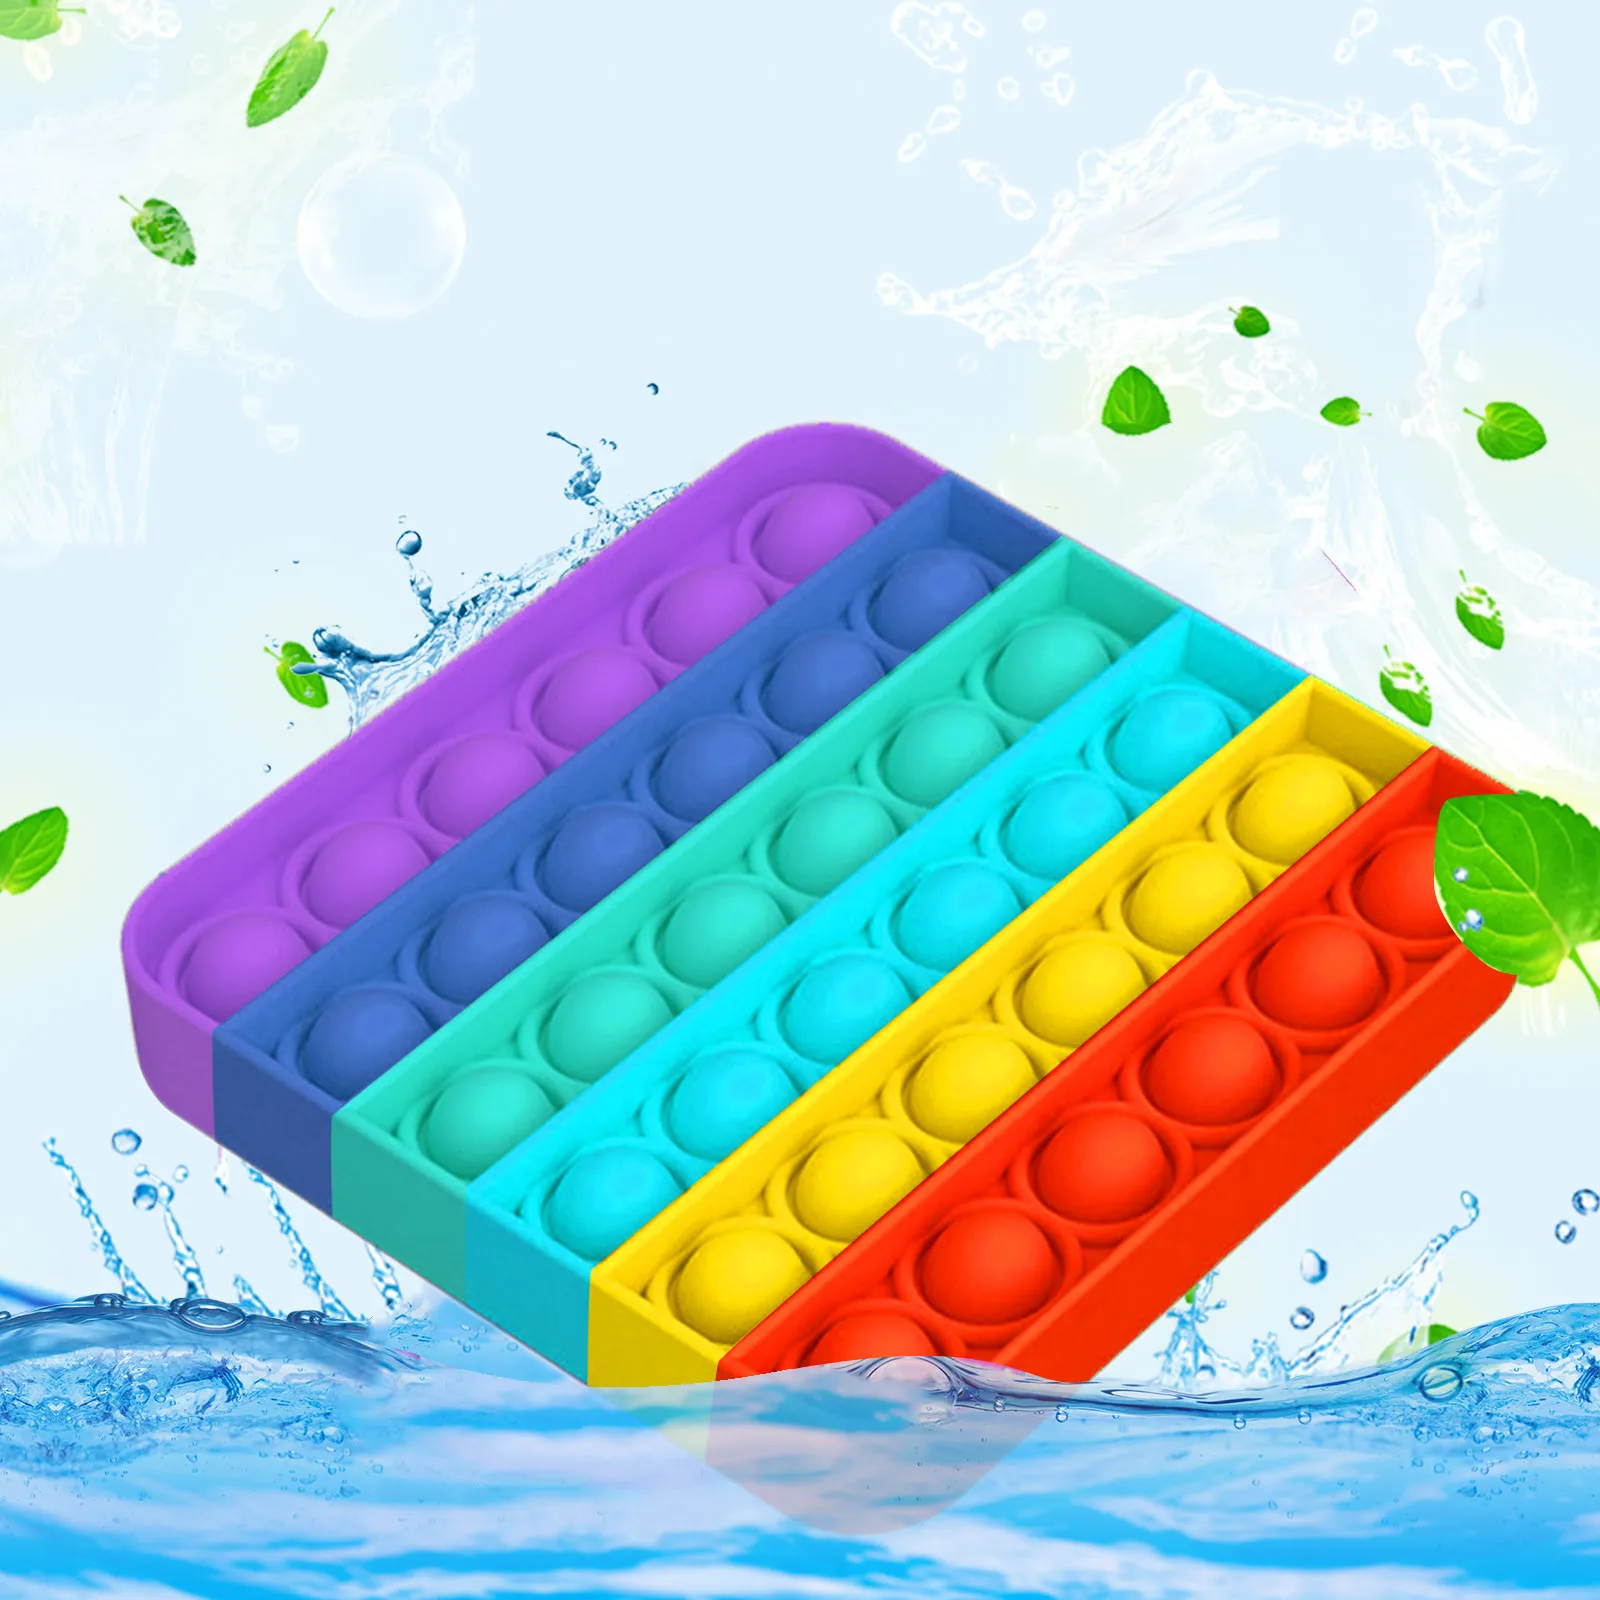 Fitget-Toys Sensory-Toy Autism Fidget Needs-Stress Pop-It-Game Push Bubble Reliever Popoit img1